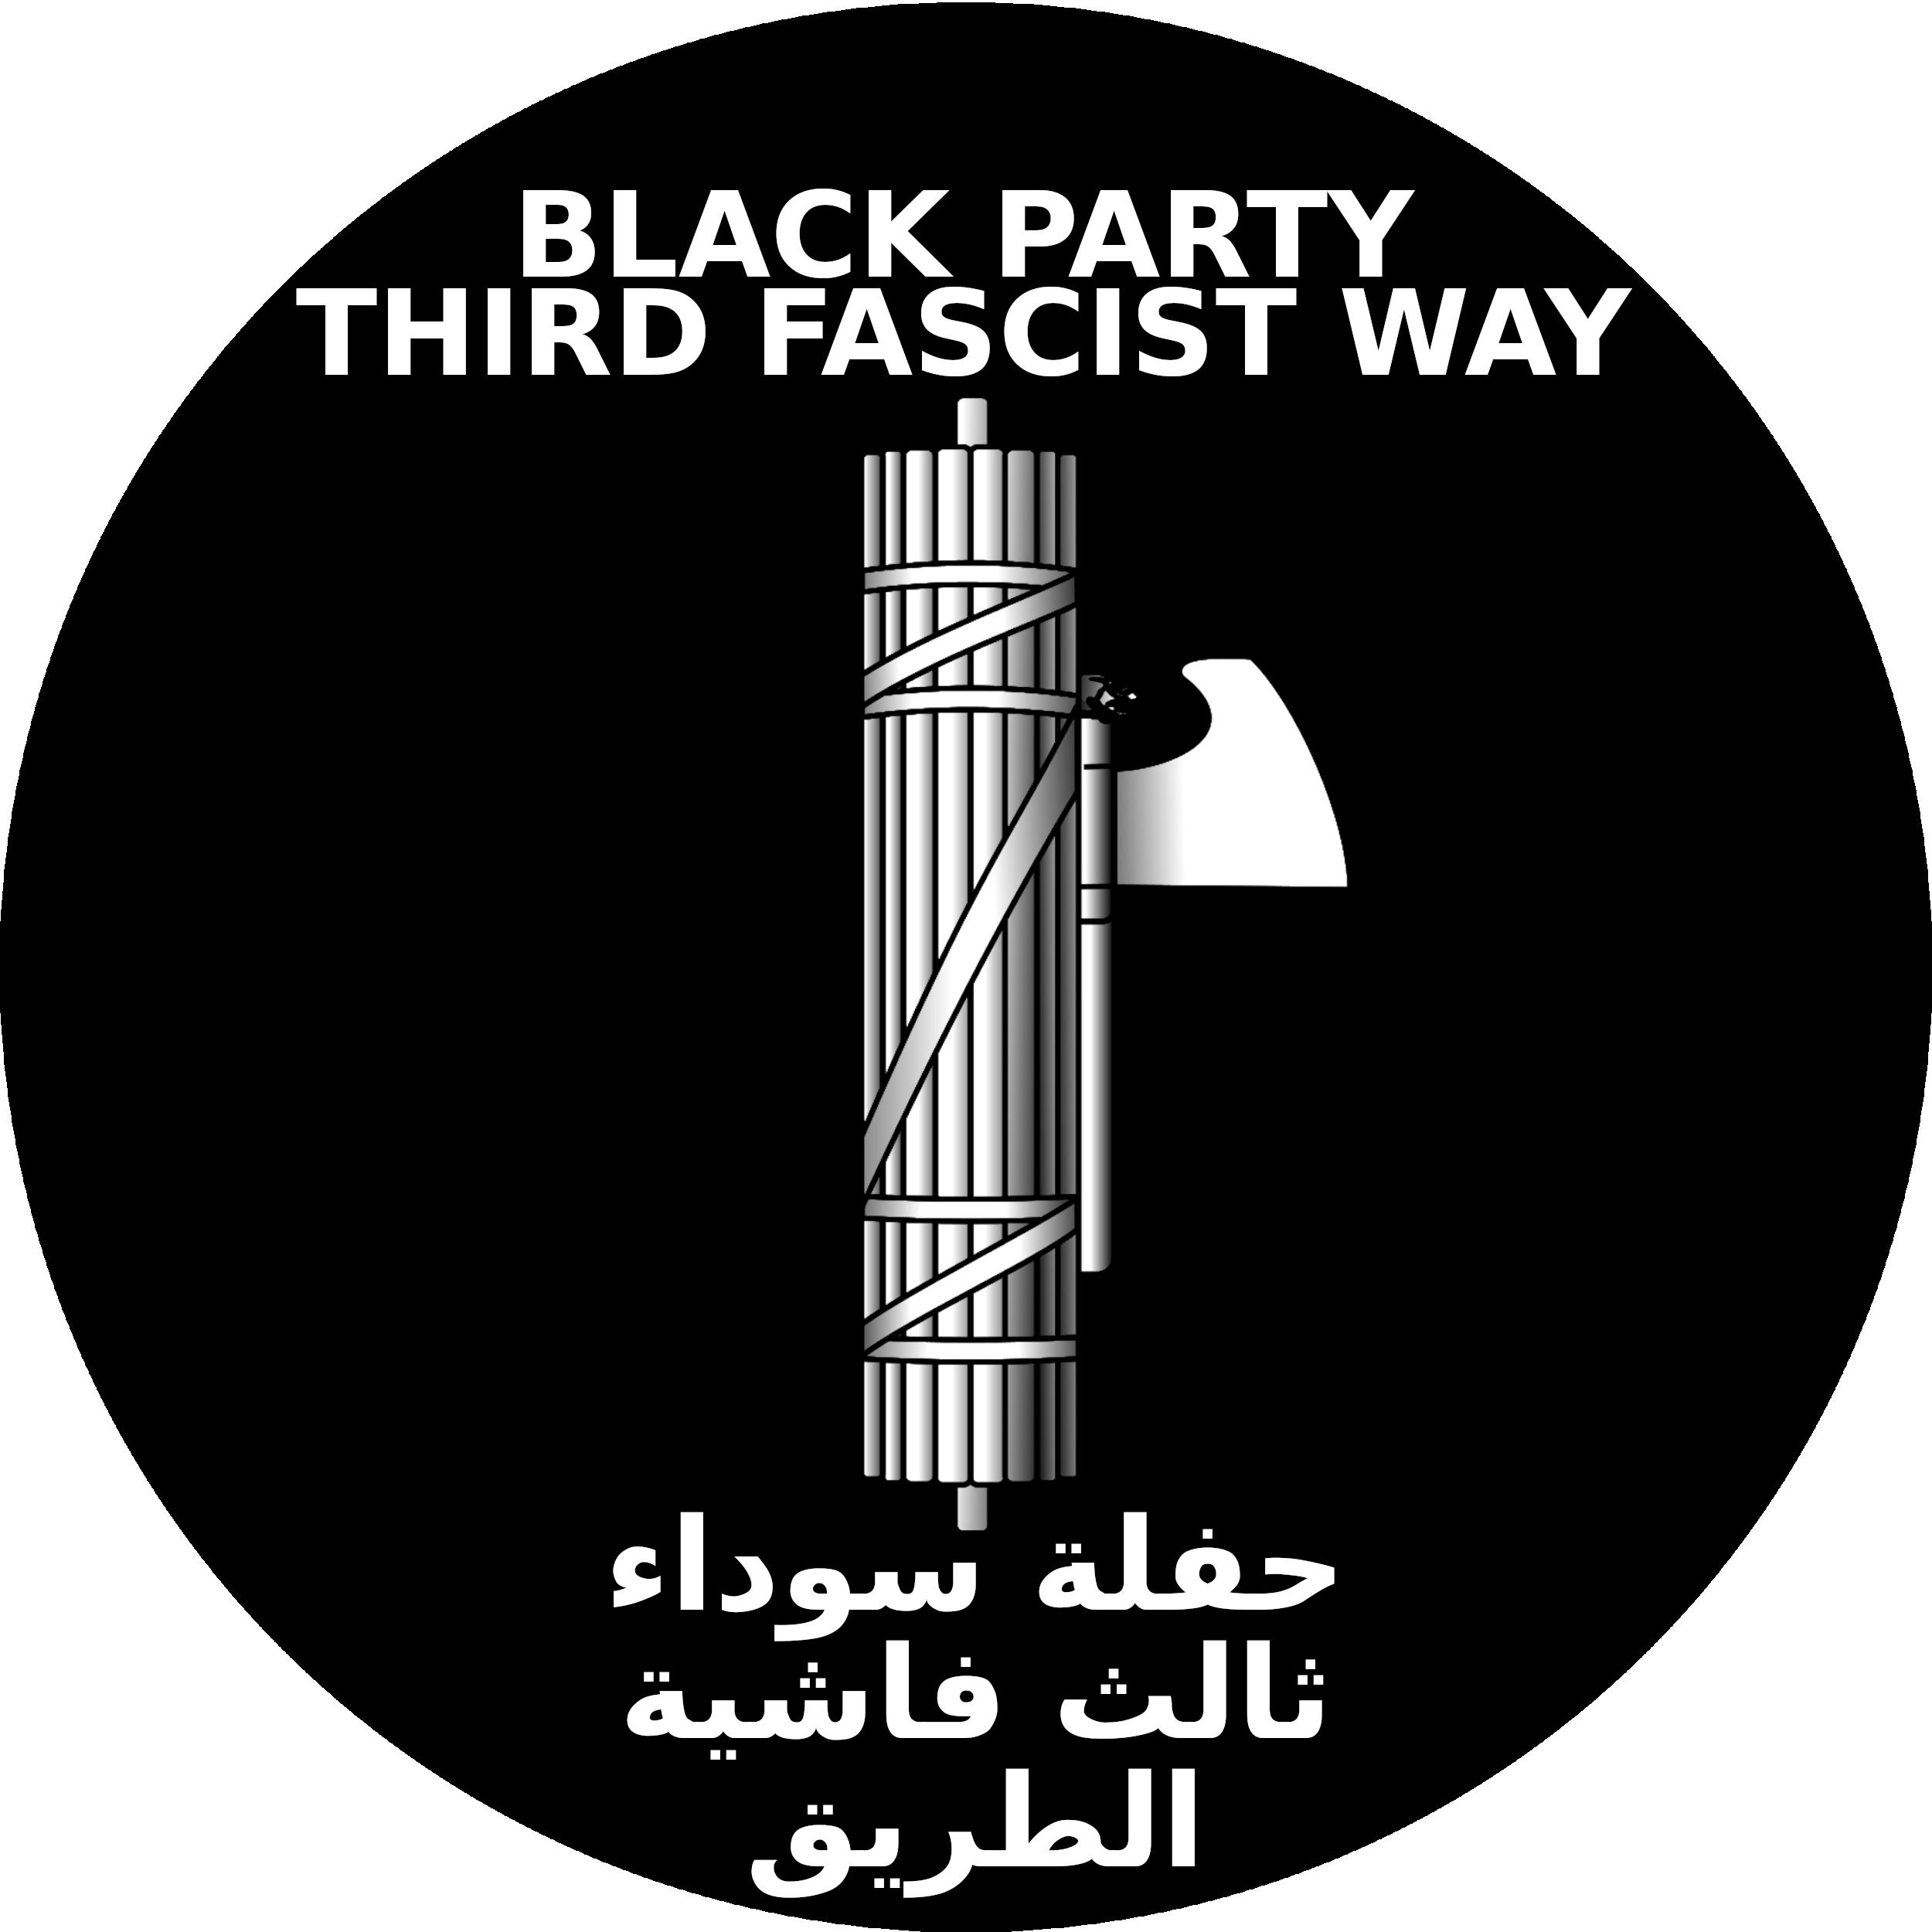 black third fascist way party 2020